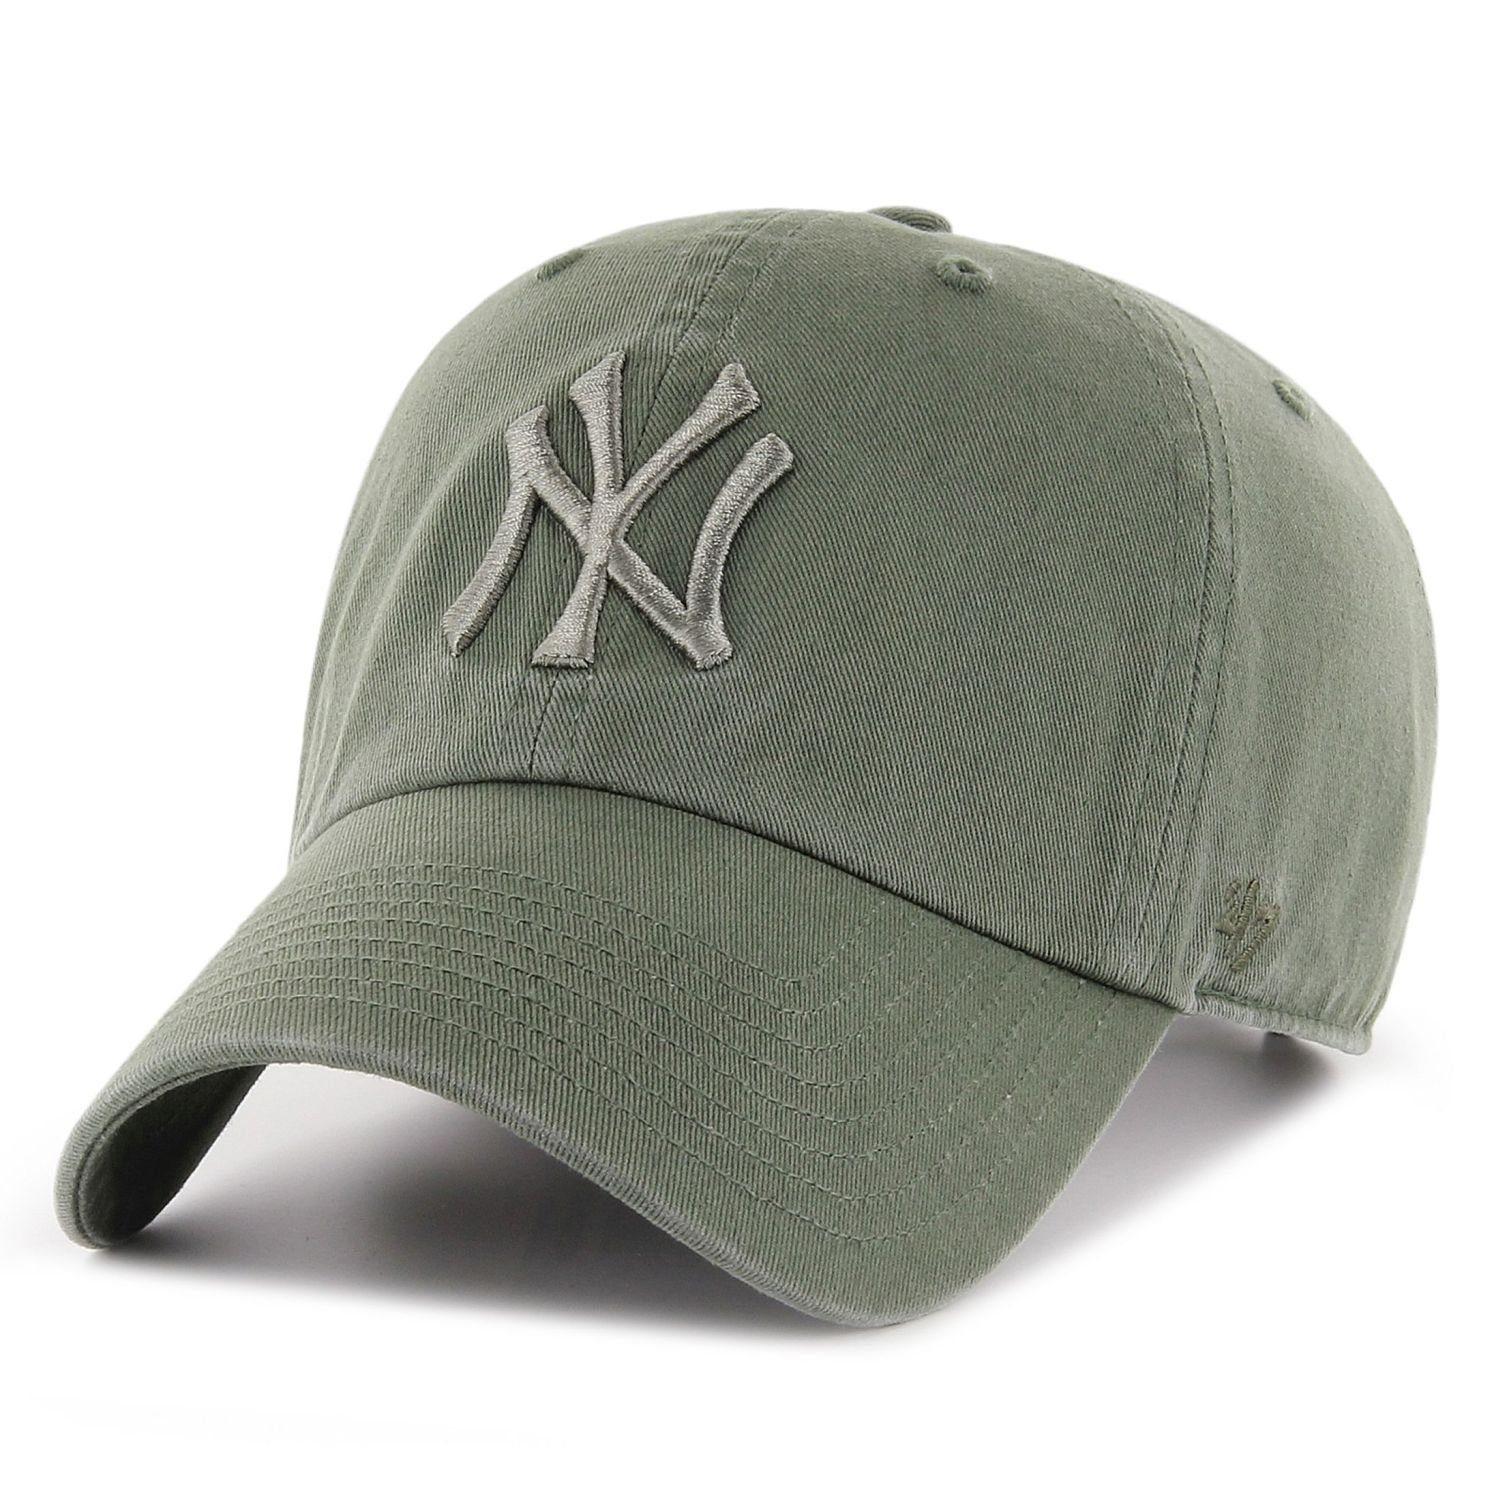 '47 Brand Baseball Cap CLEAN UP New York Yankees